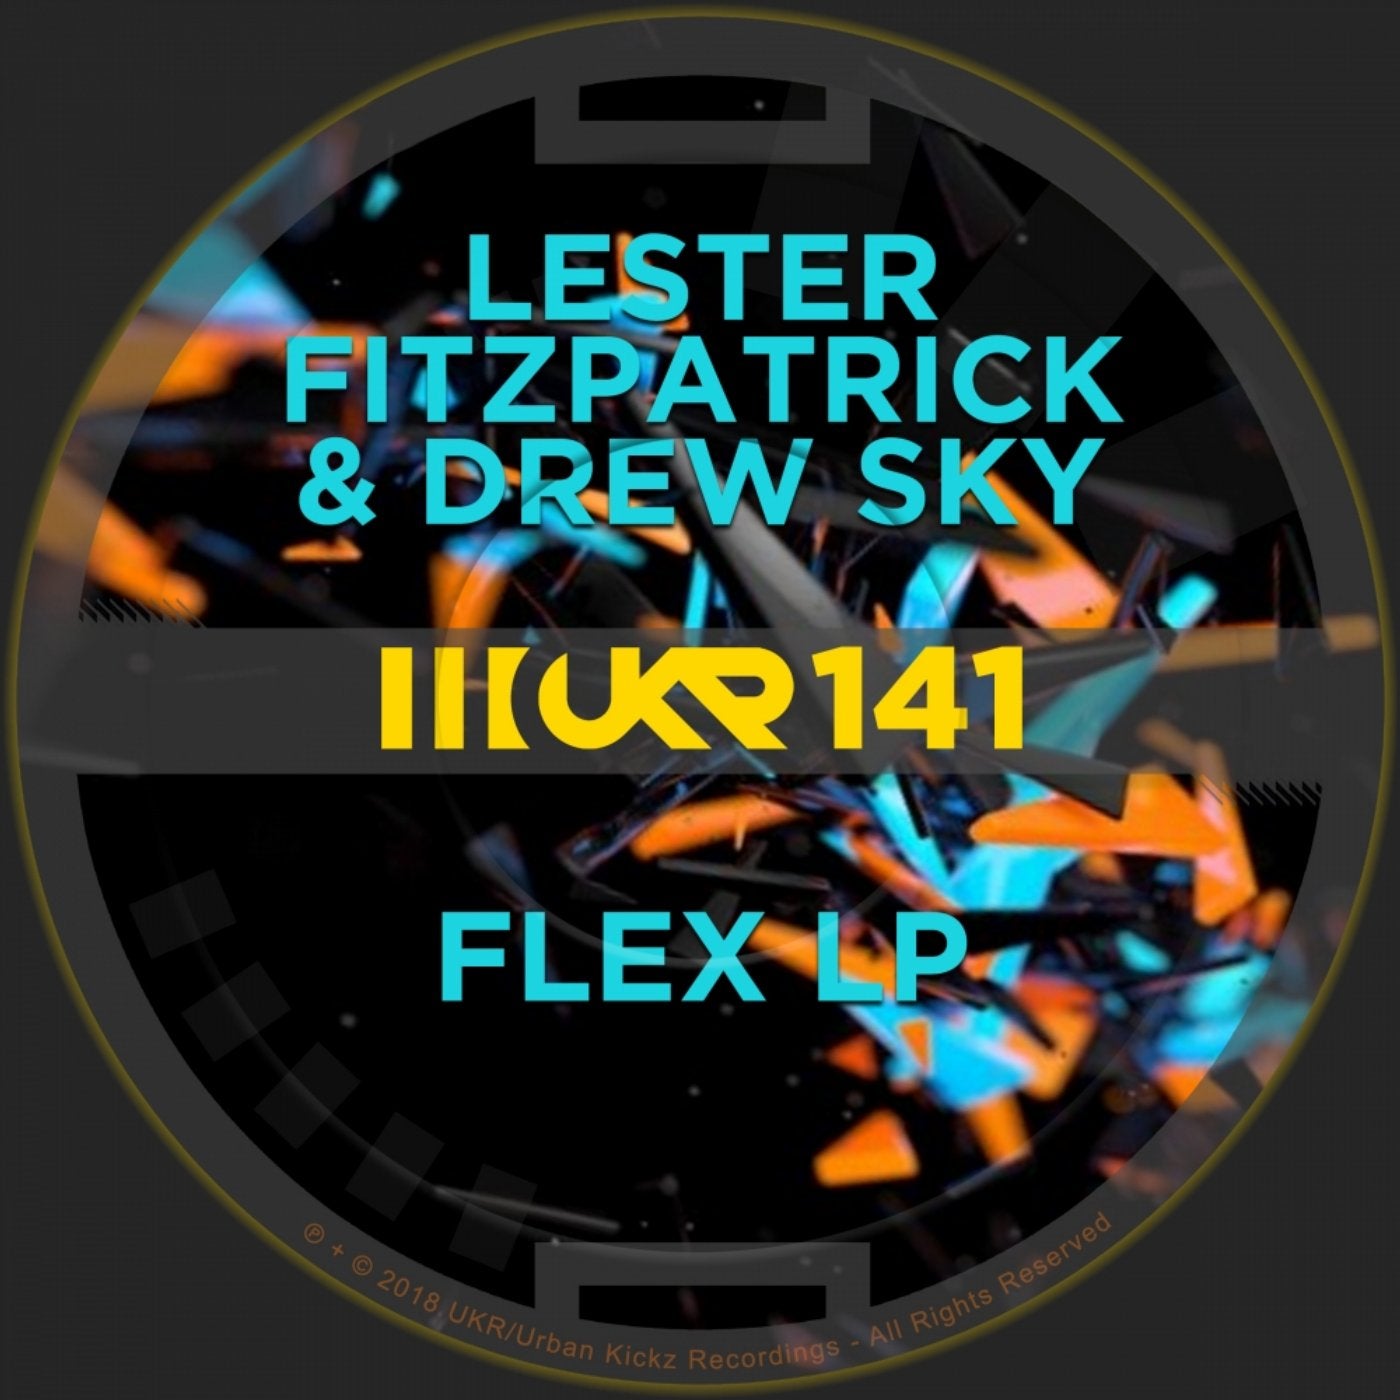 Flex LP